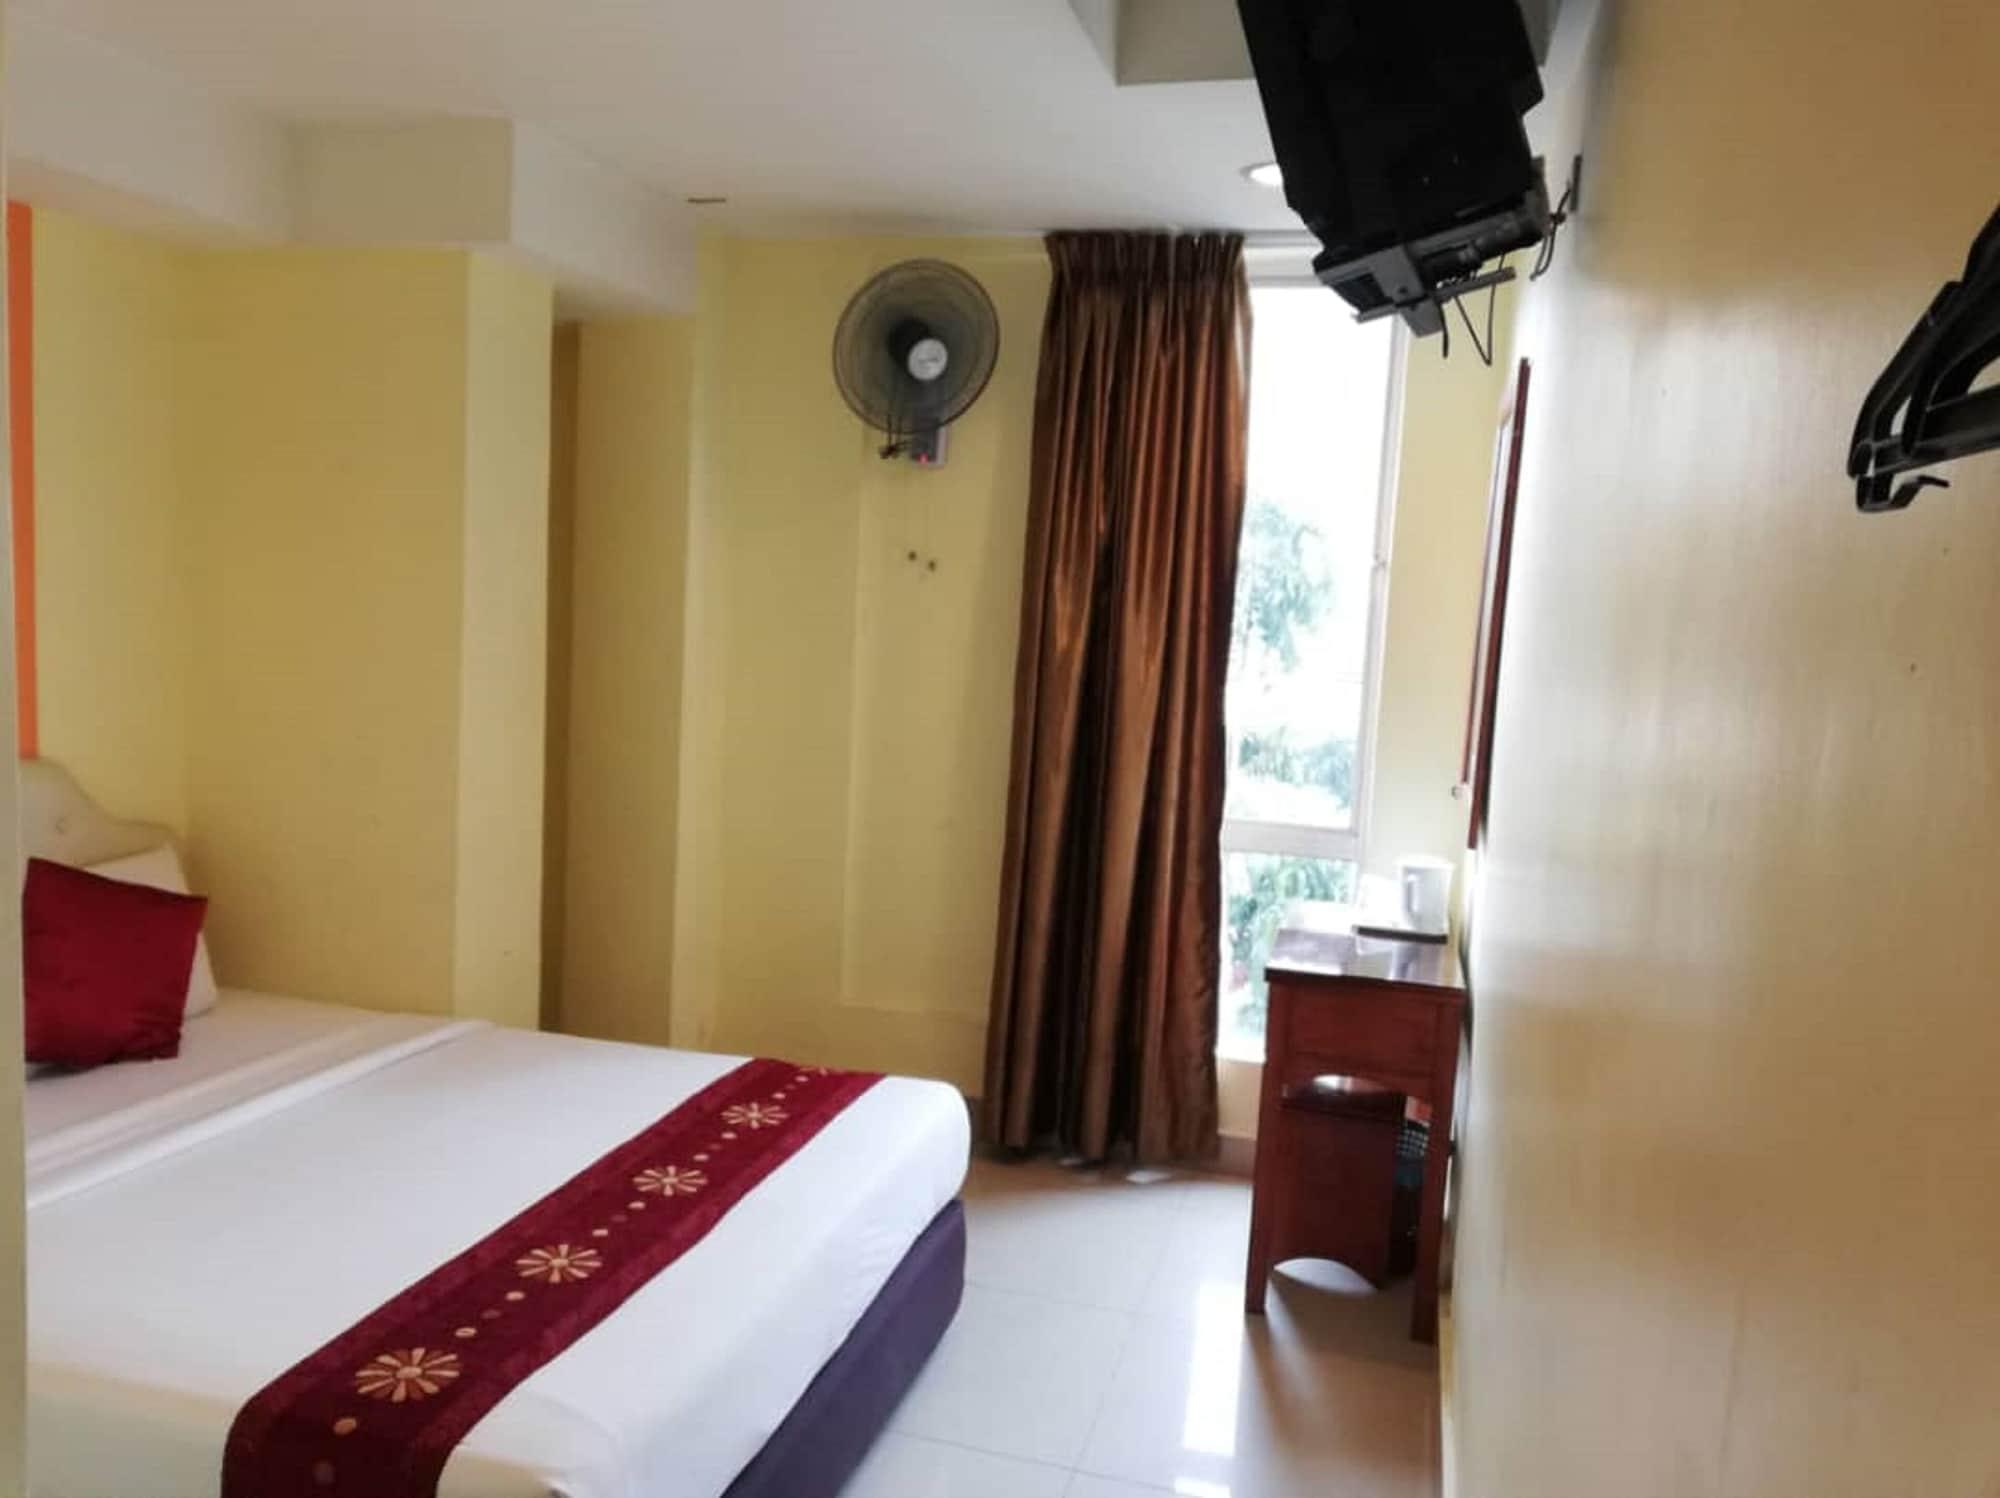 Sun Inns Hotel Kota Damansara Near Hospital Sungai Buloh Bagian luar foto